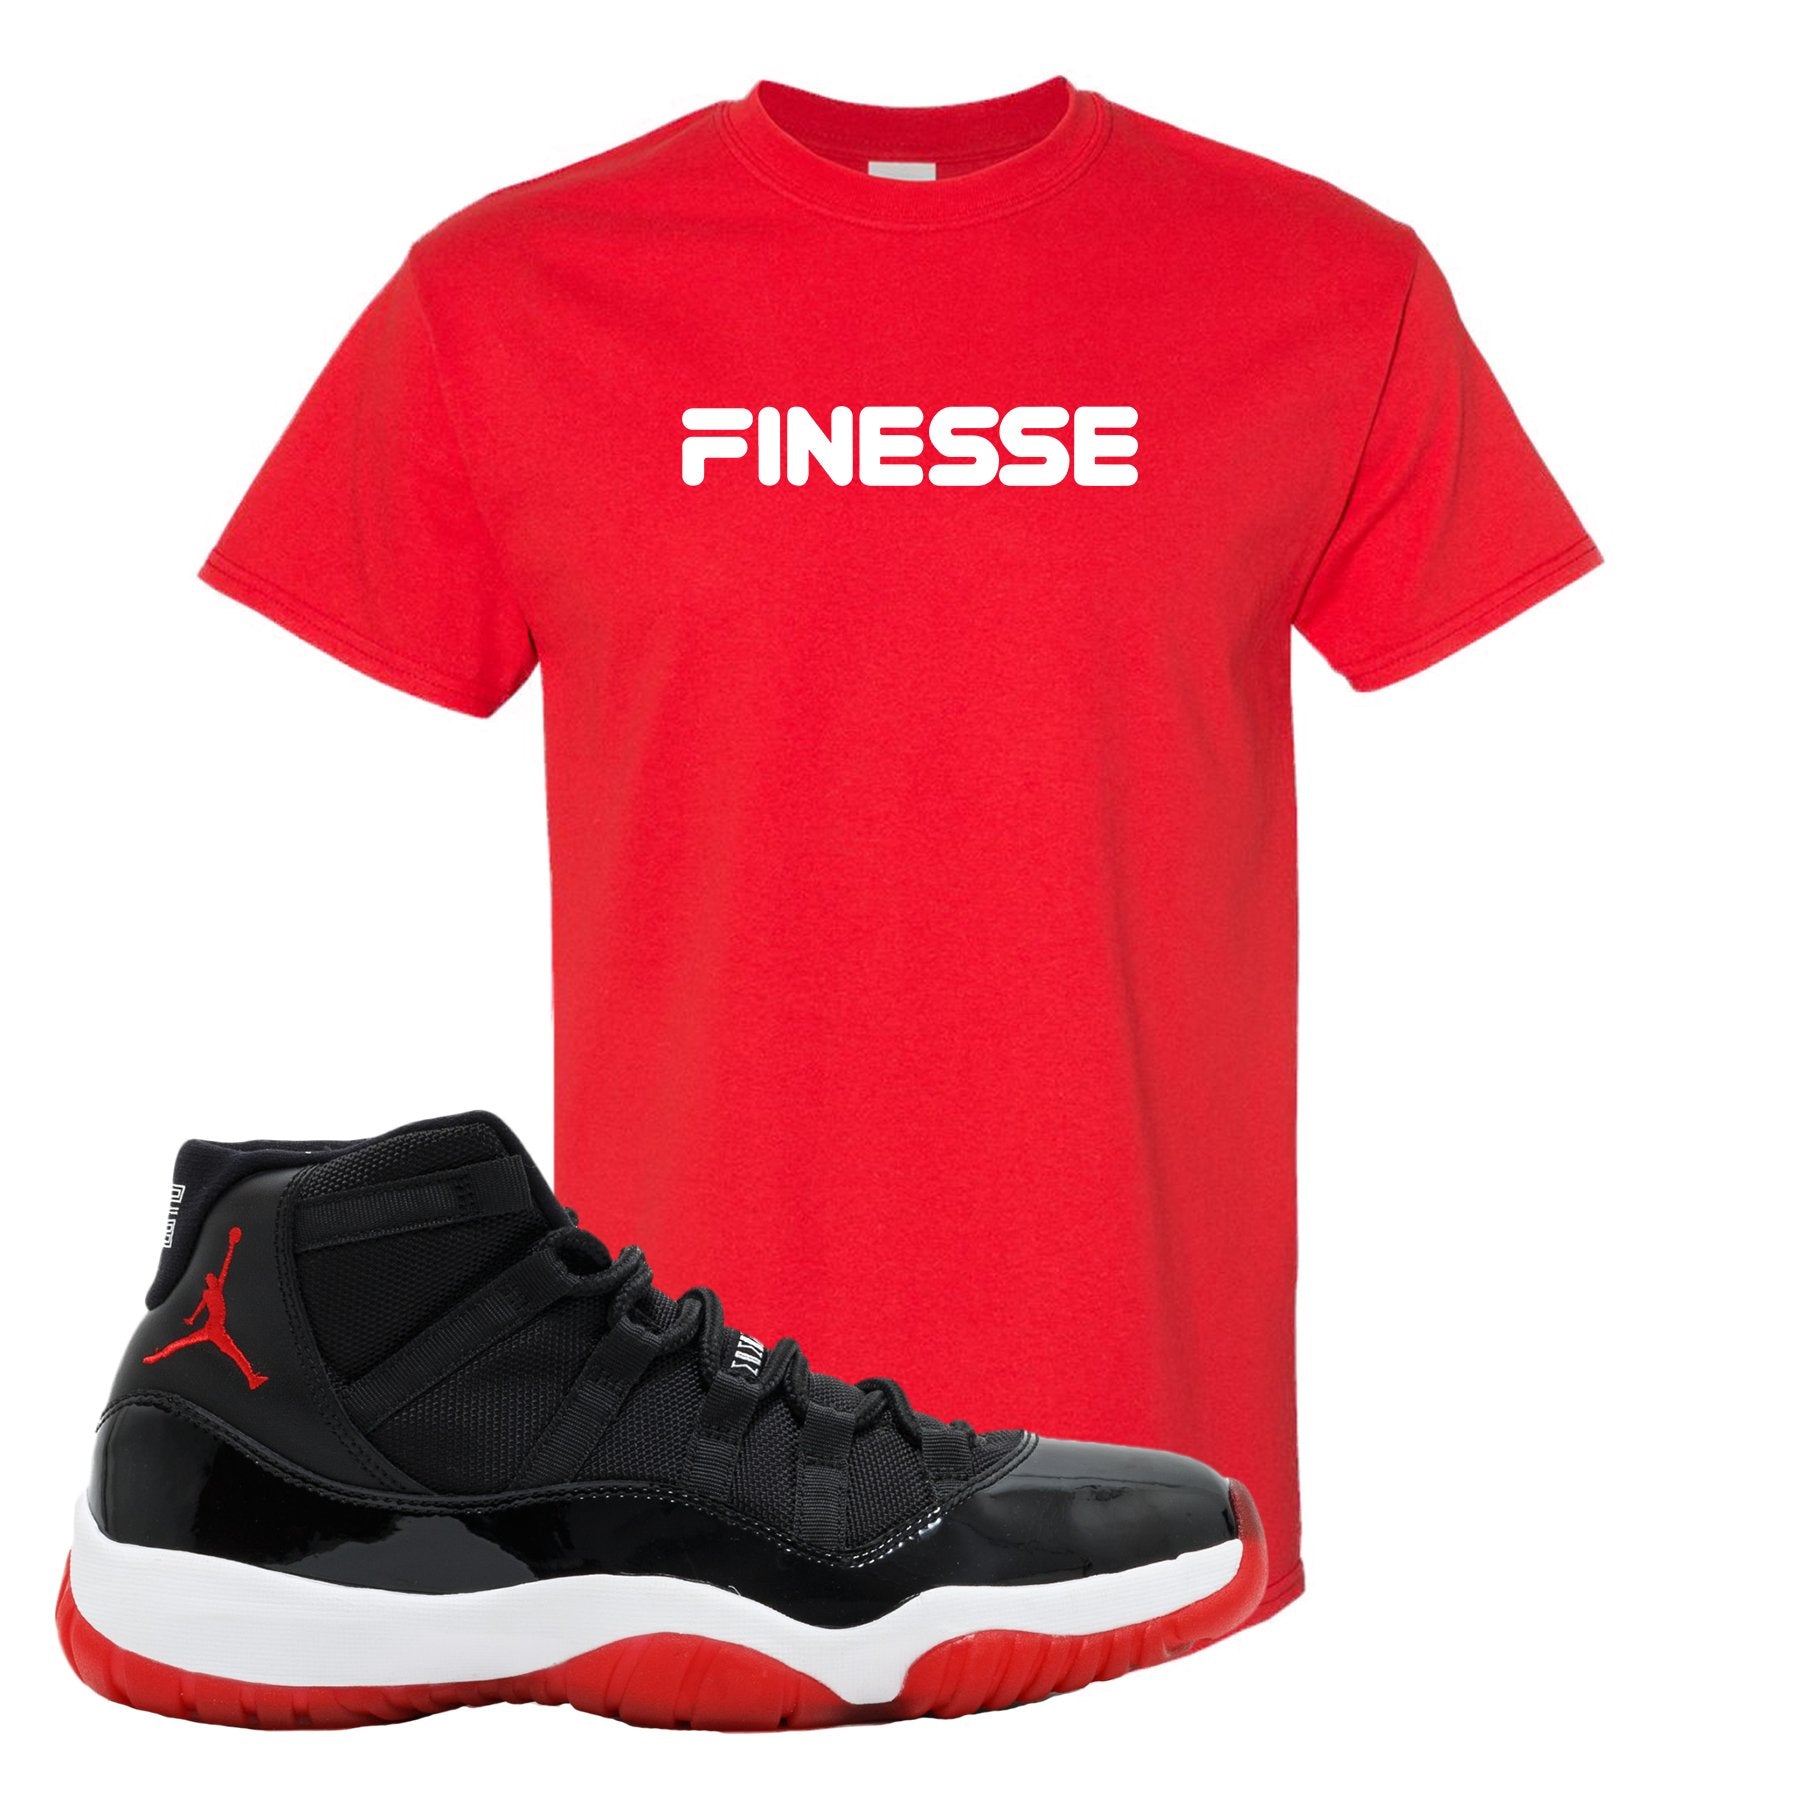 Jordan 11 Bred Finesse Red Sneaker Hook Up T-Shirt